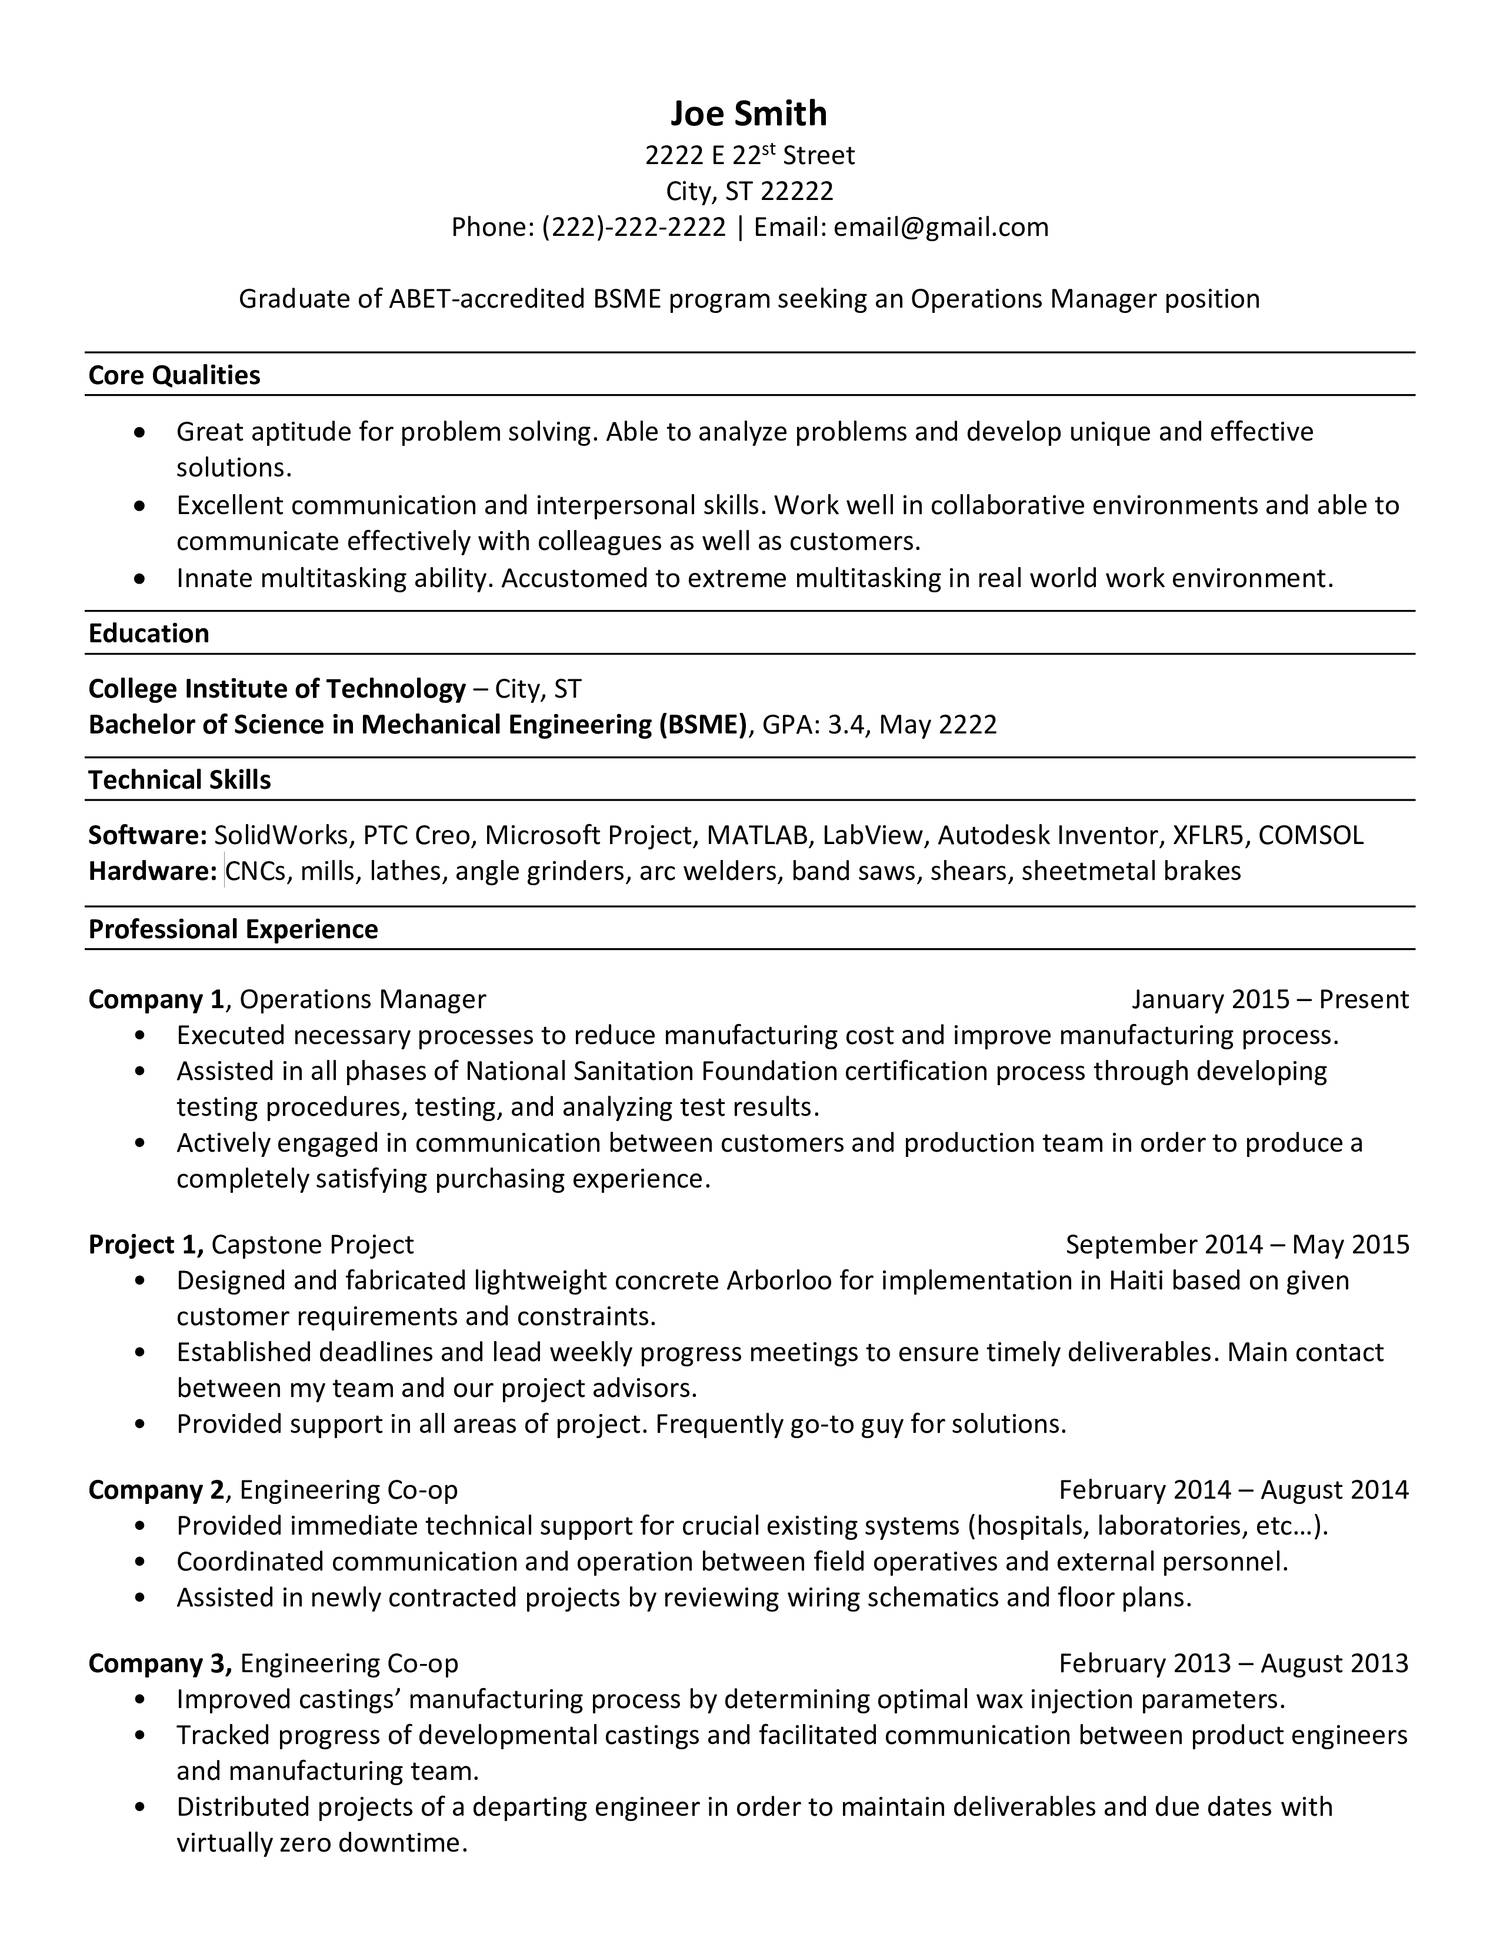 college application resume examples reddit